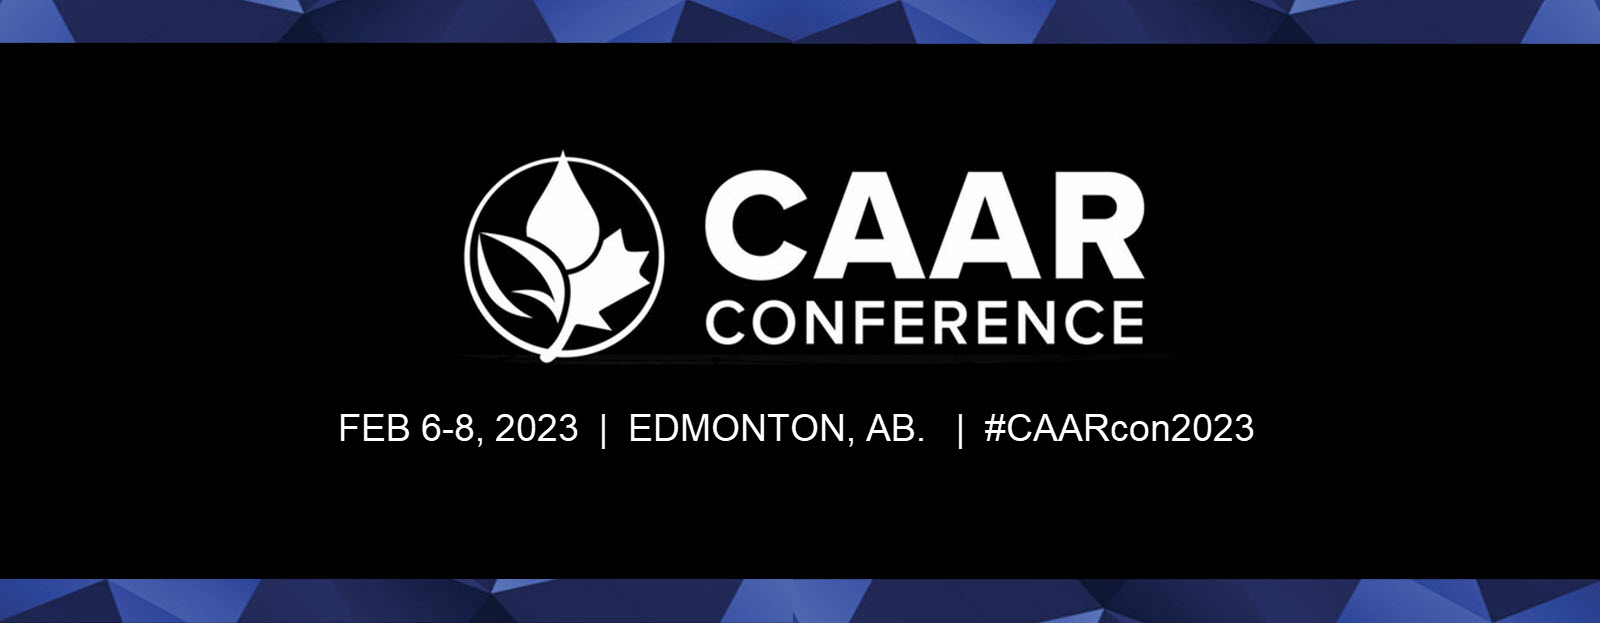 Banner for CAAR Conference logo